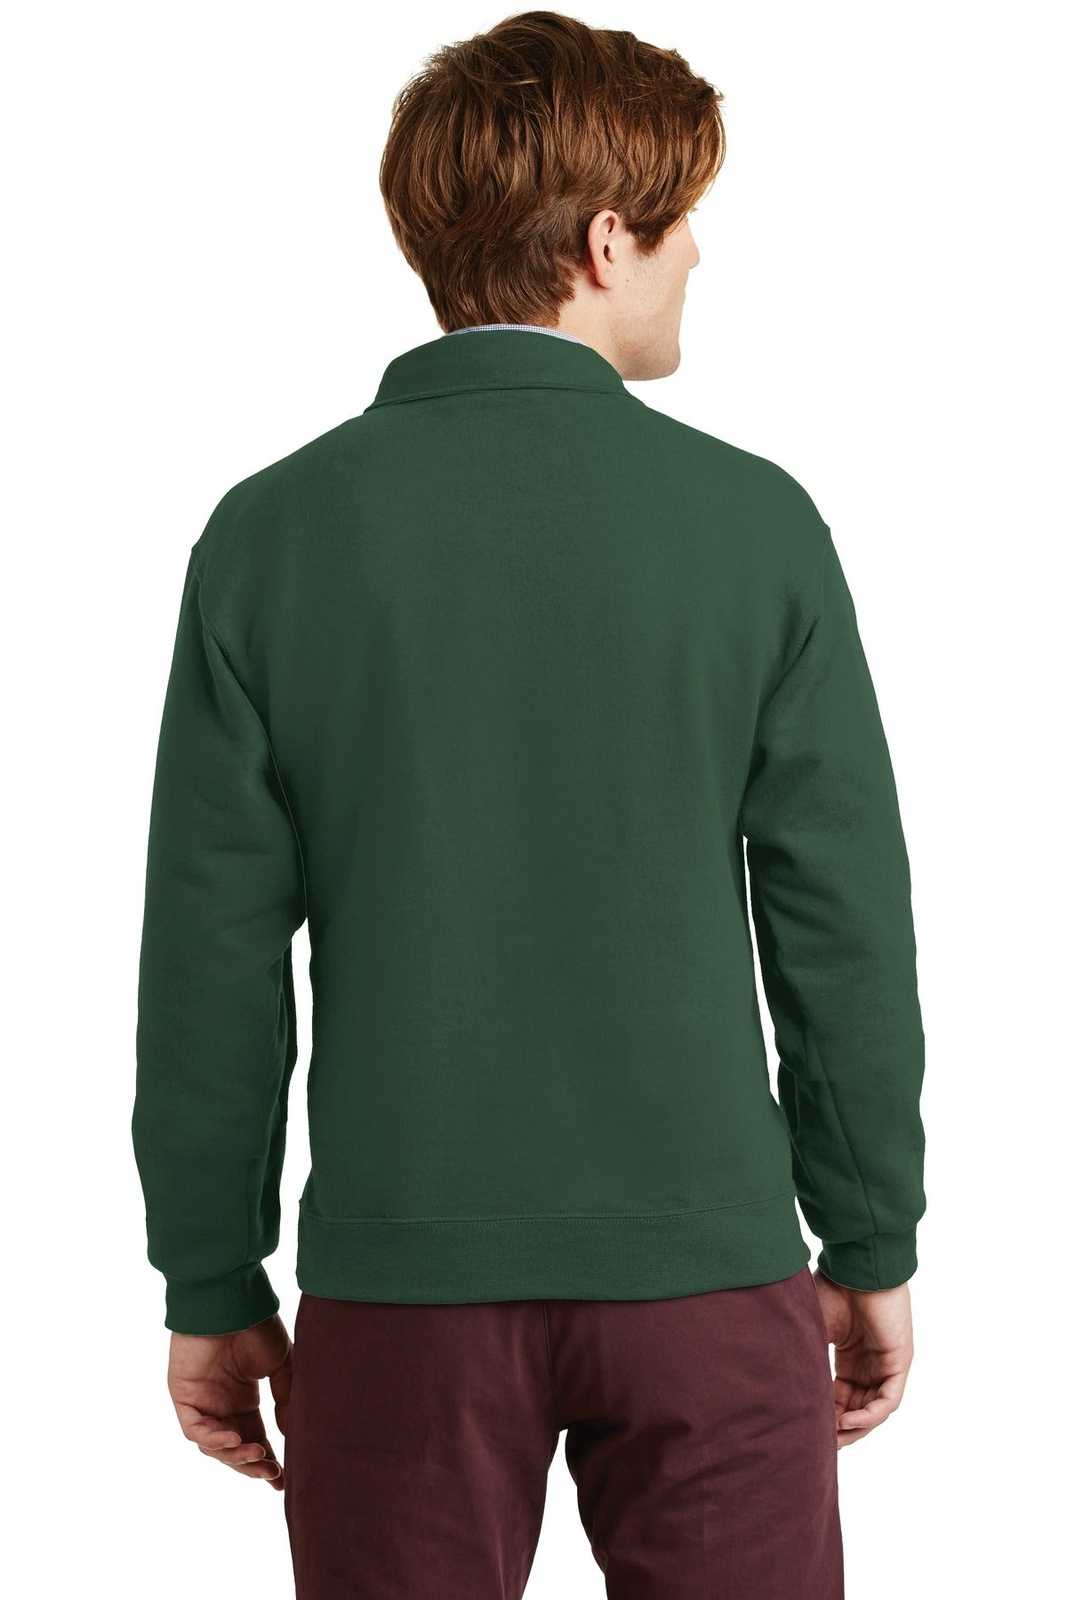 Jerzees 4528M Super Sweats Nublend 1/4-Zip Sweatshirt with Cadet Collar - Forest Green - HIT a Double